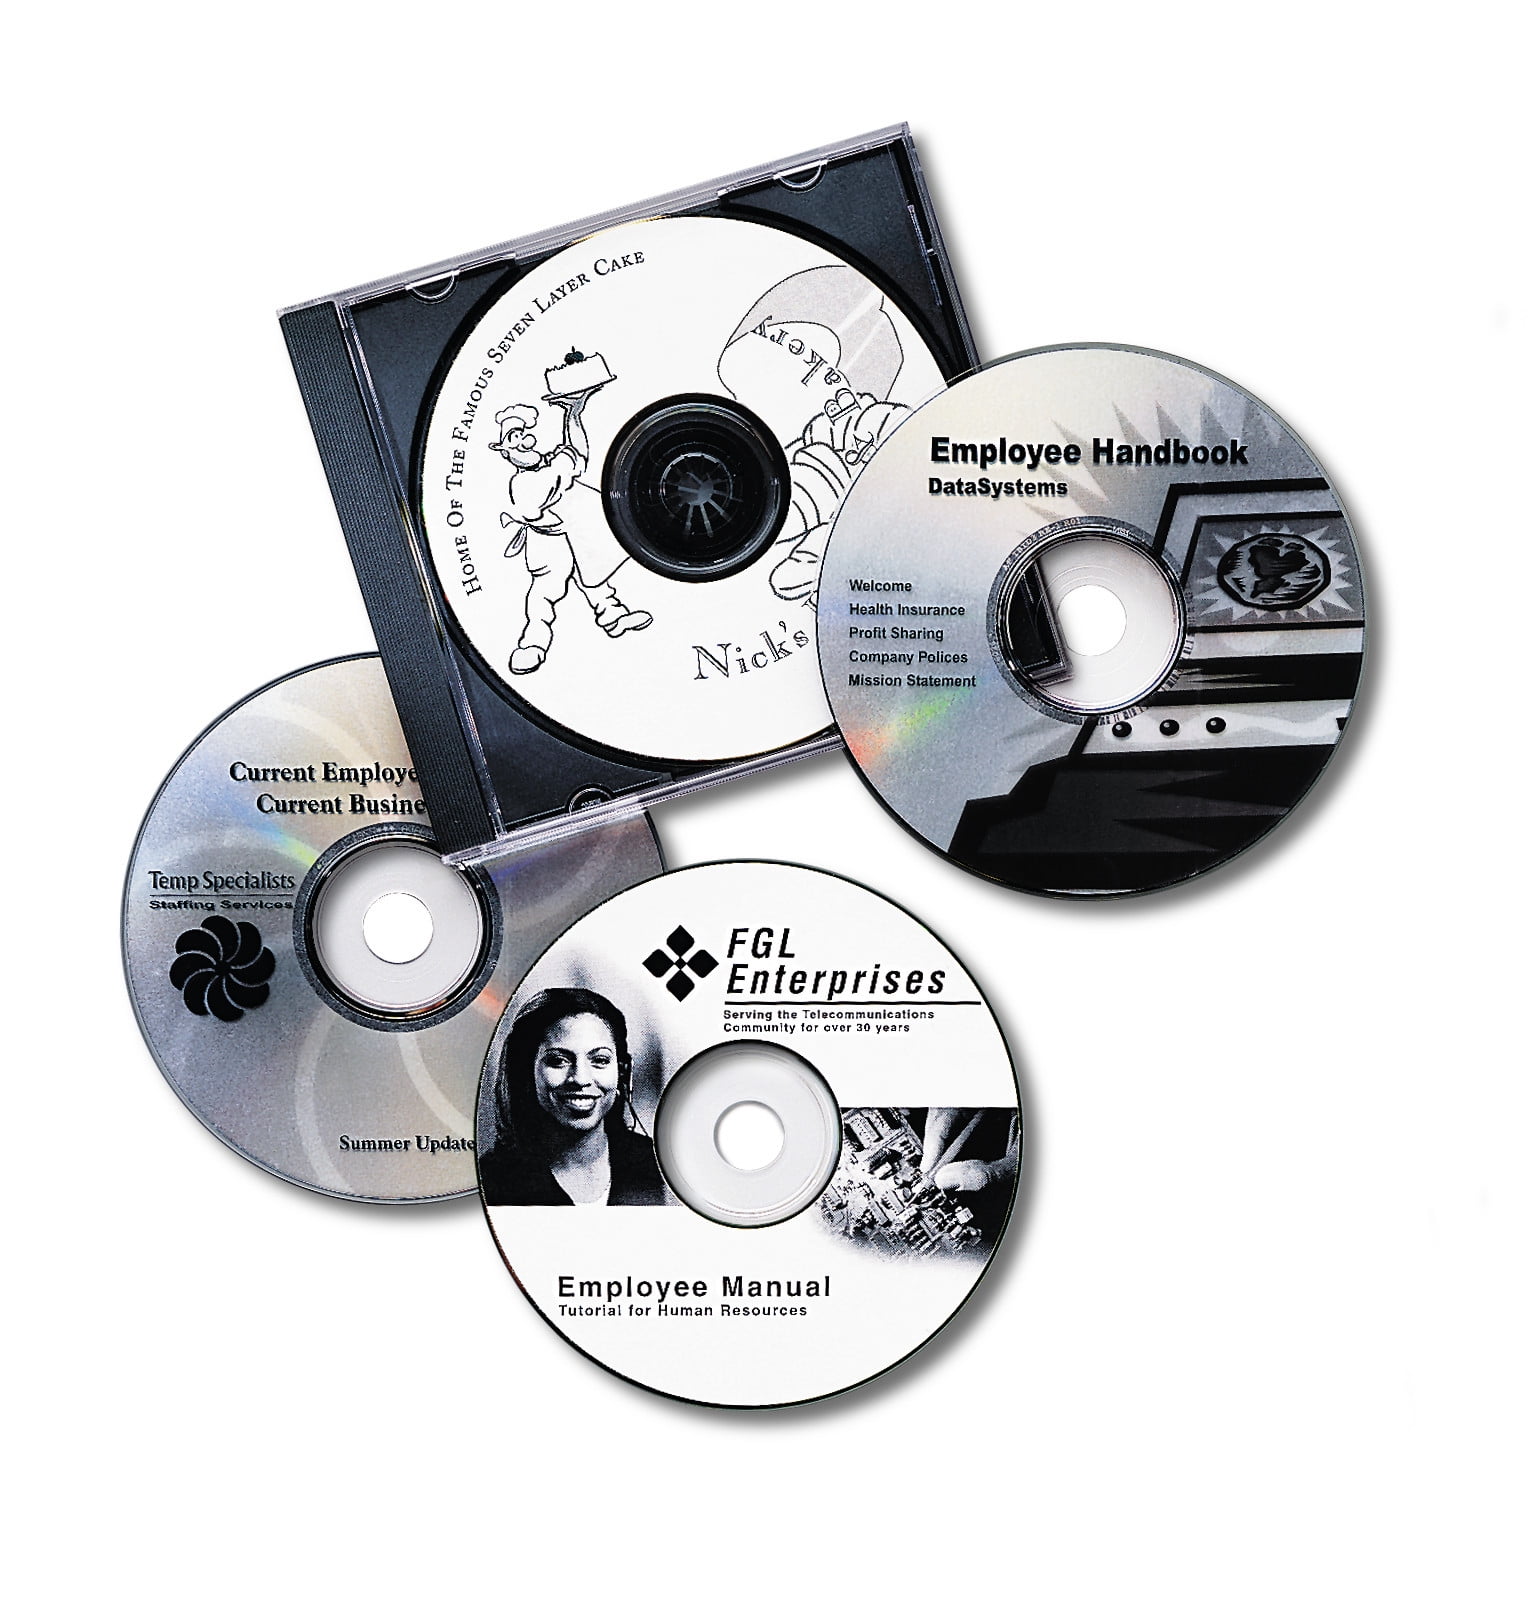 CD/DVD Labels - Inkjet / Laser, White Matte S-8076 - Uline